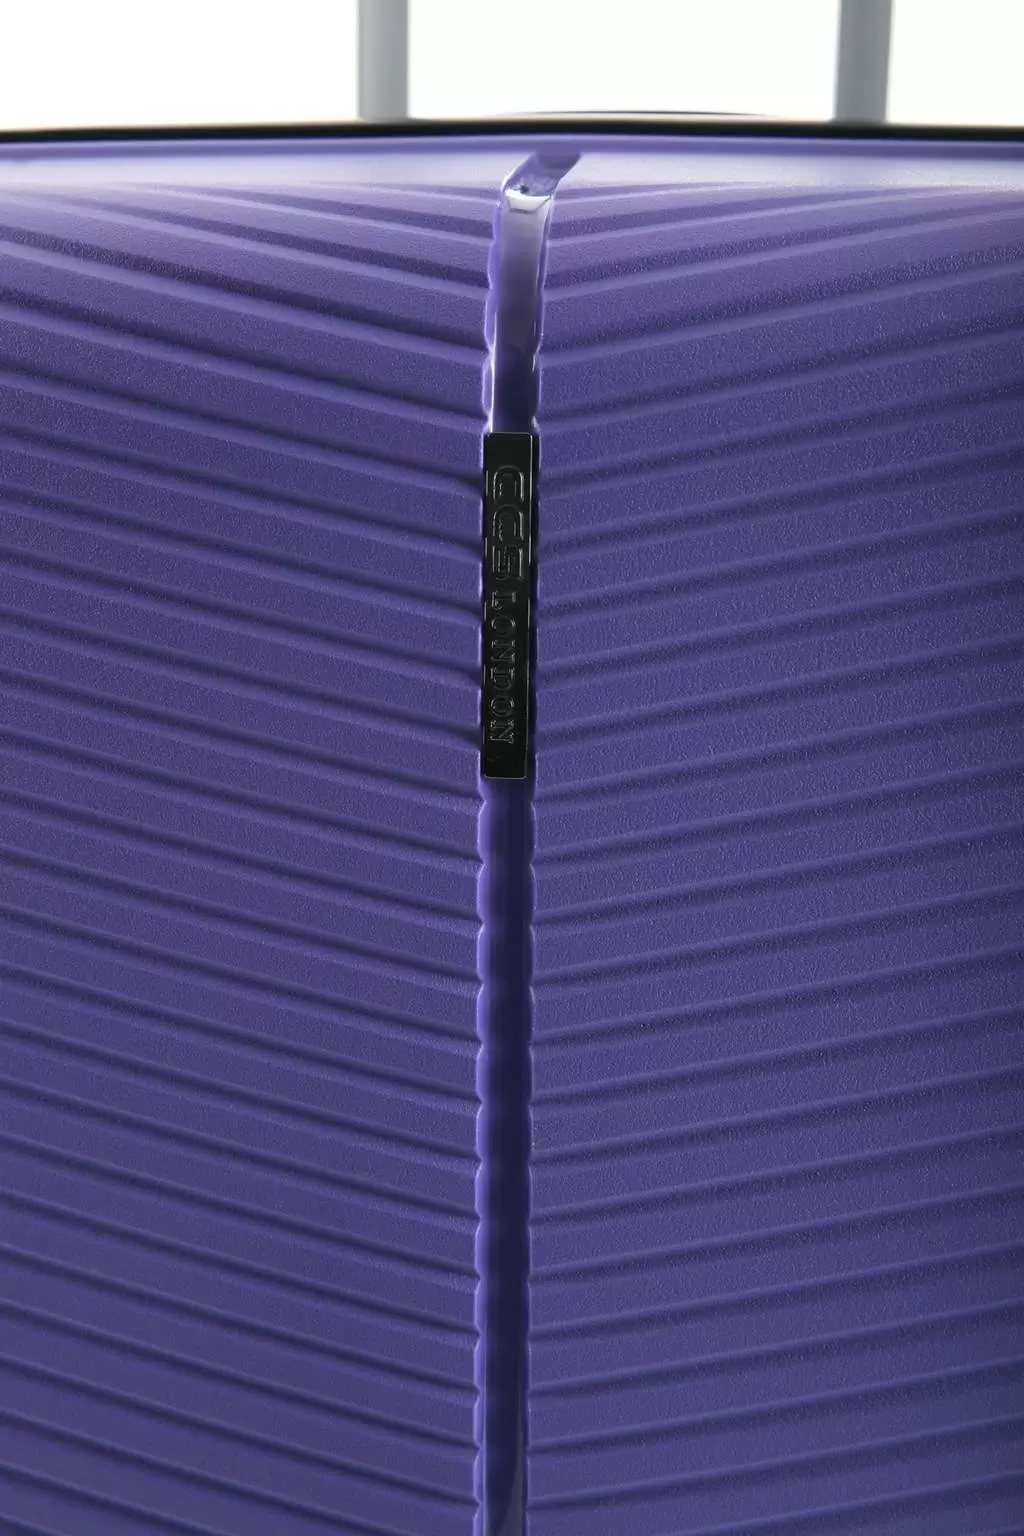 Valiză CCS 5224 L, violet